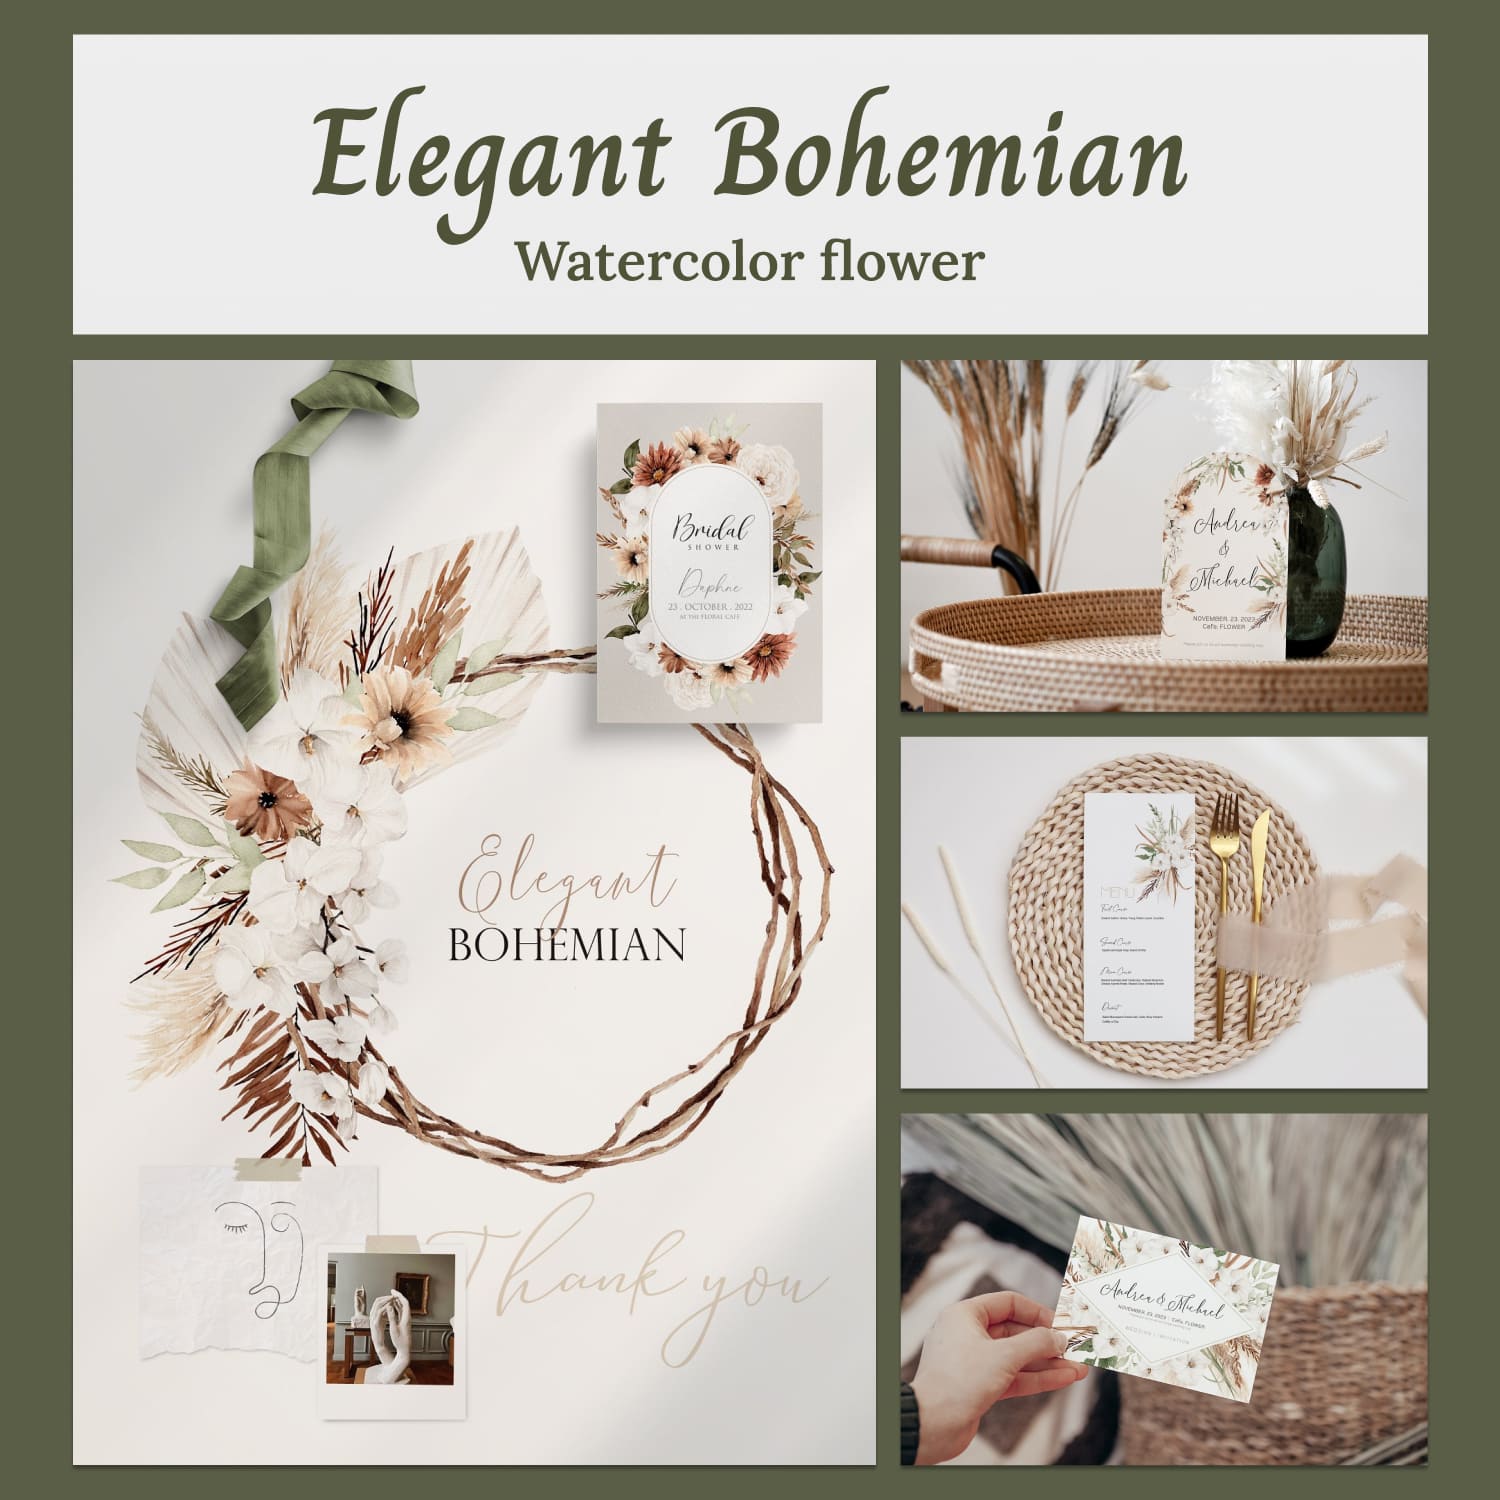 Watercolor Flower Illustrations - Elegant Bohemian cover image.